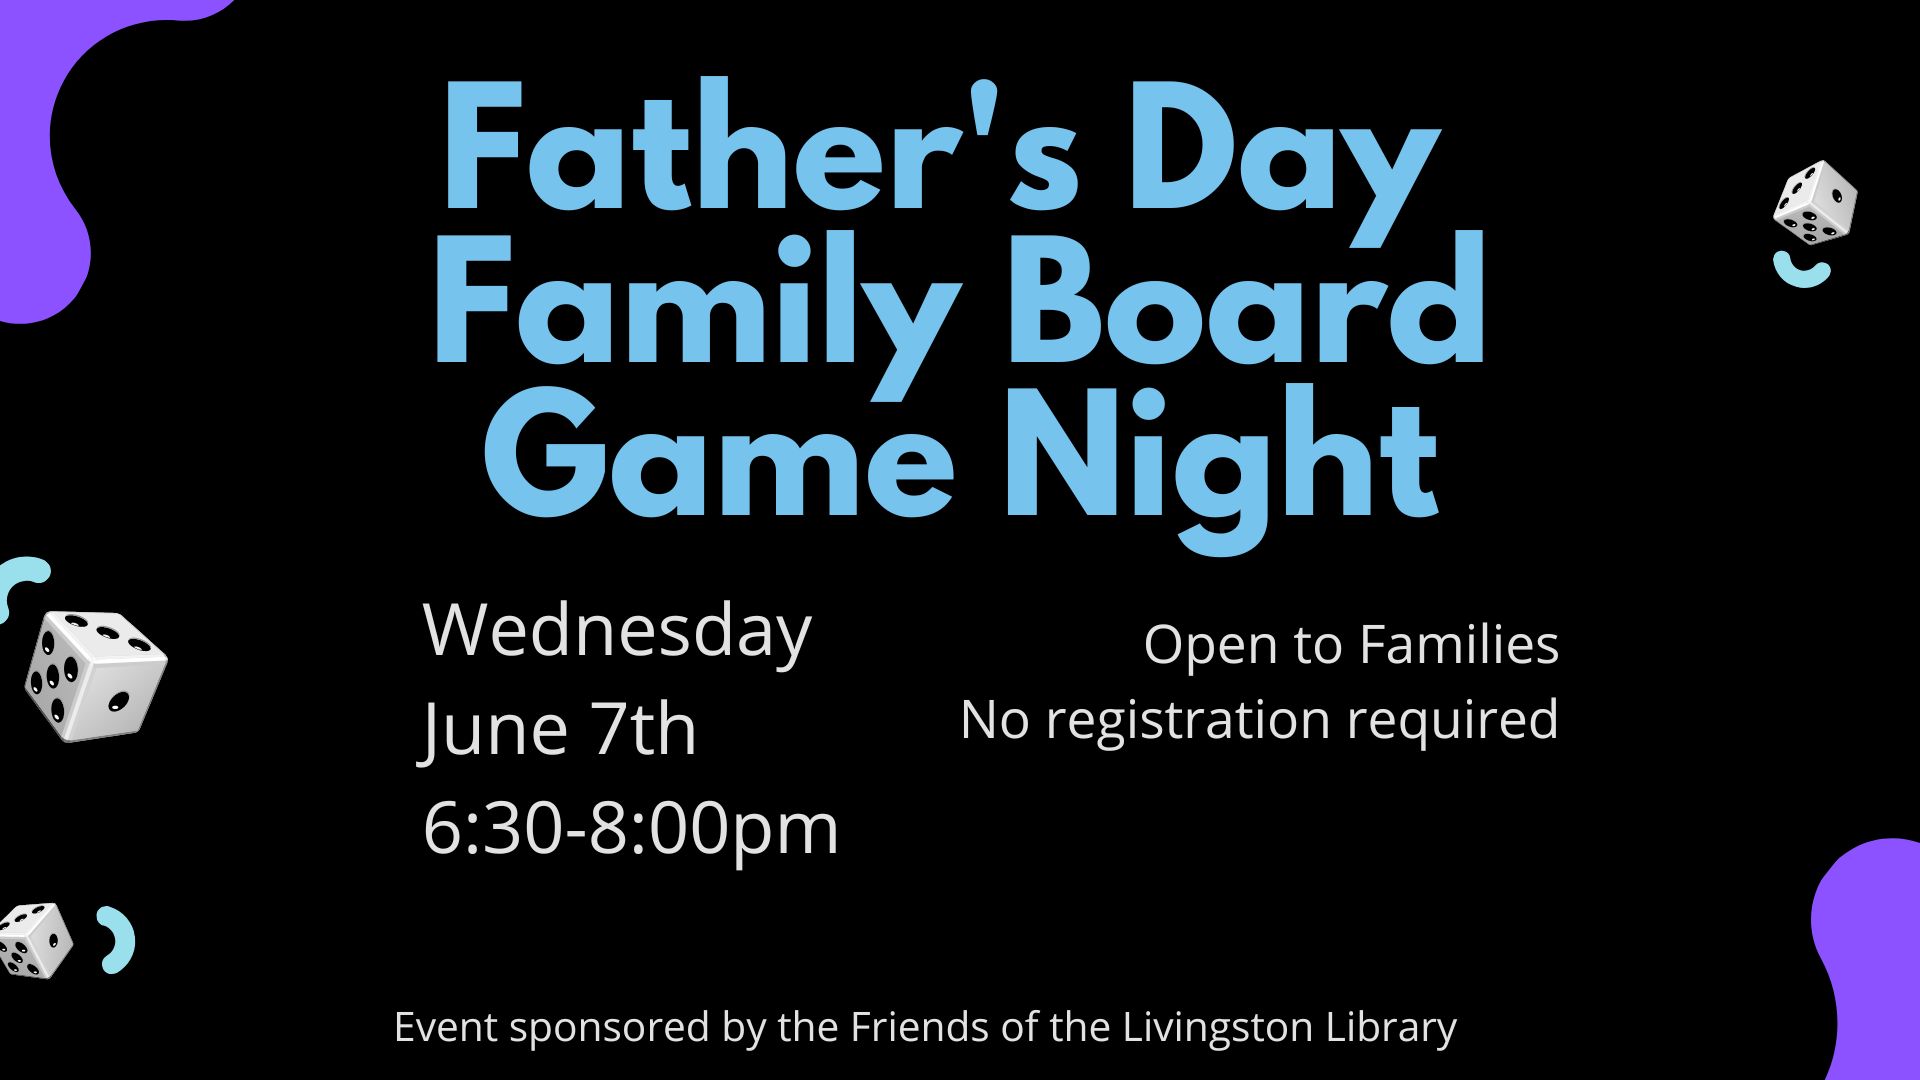 Board game night promo. Black background, dice, event description and time.